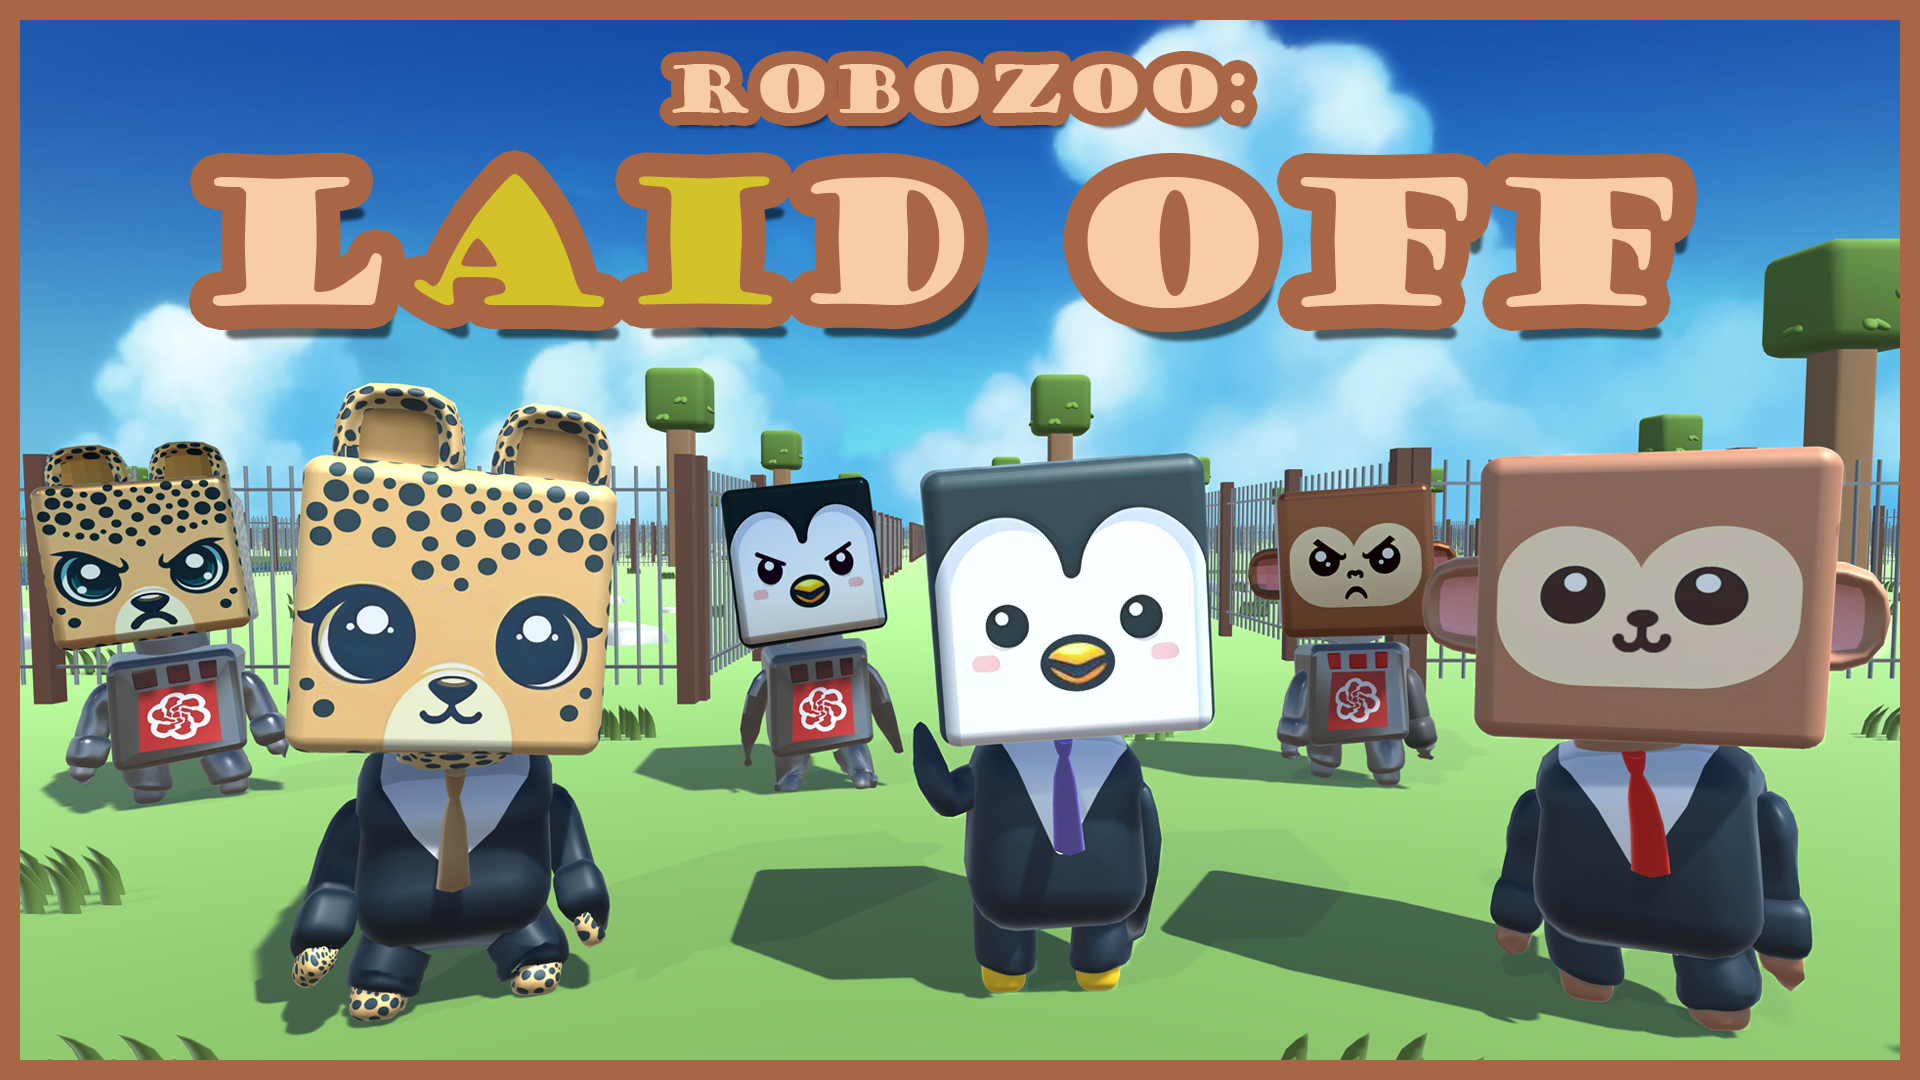 RoboZoo: Laid Off